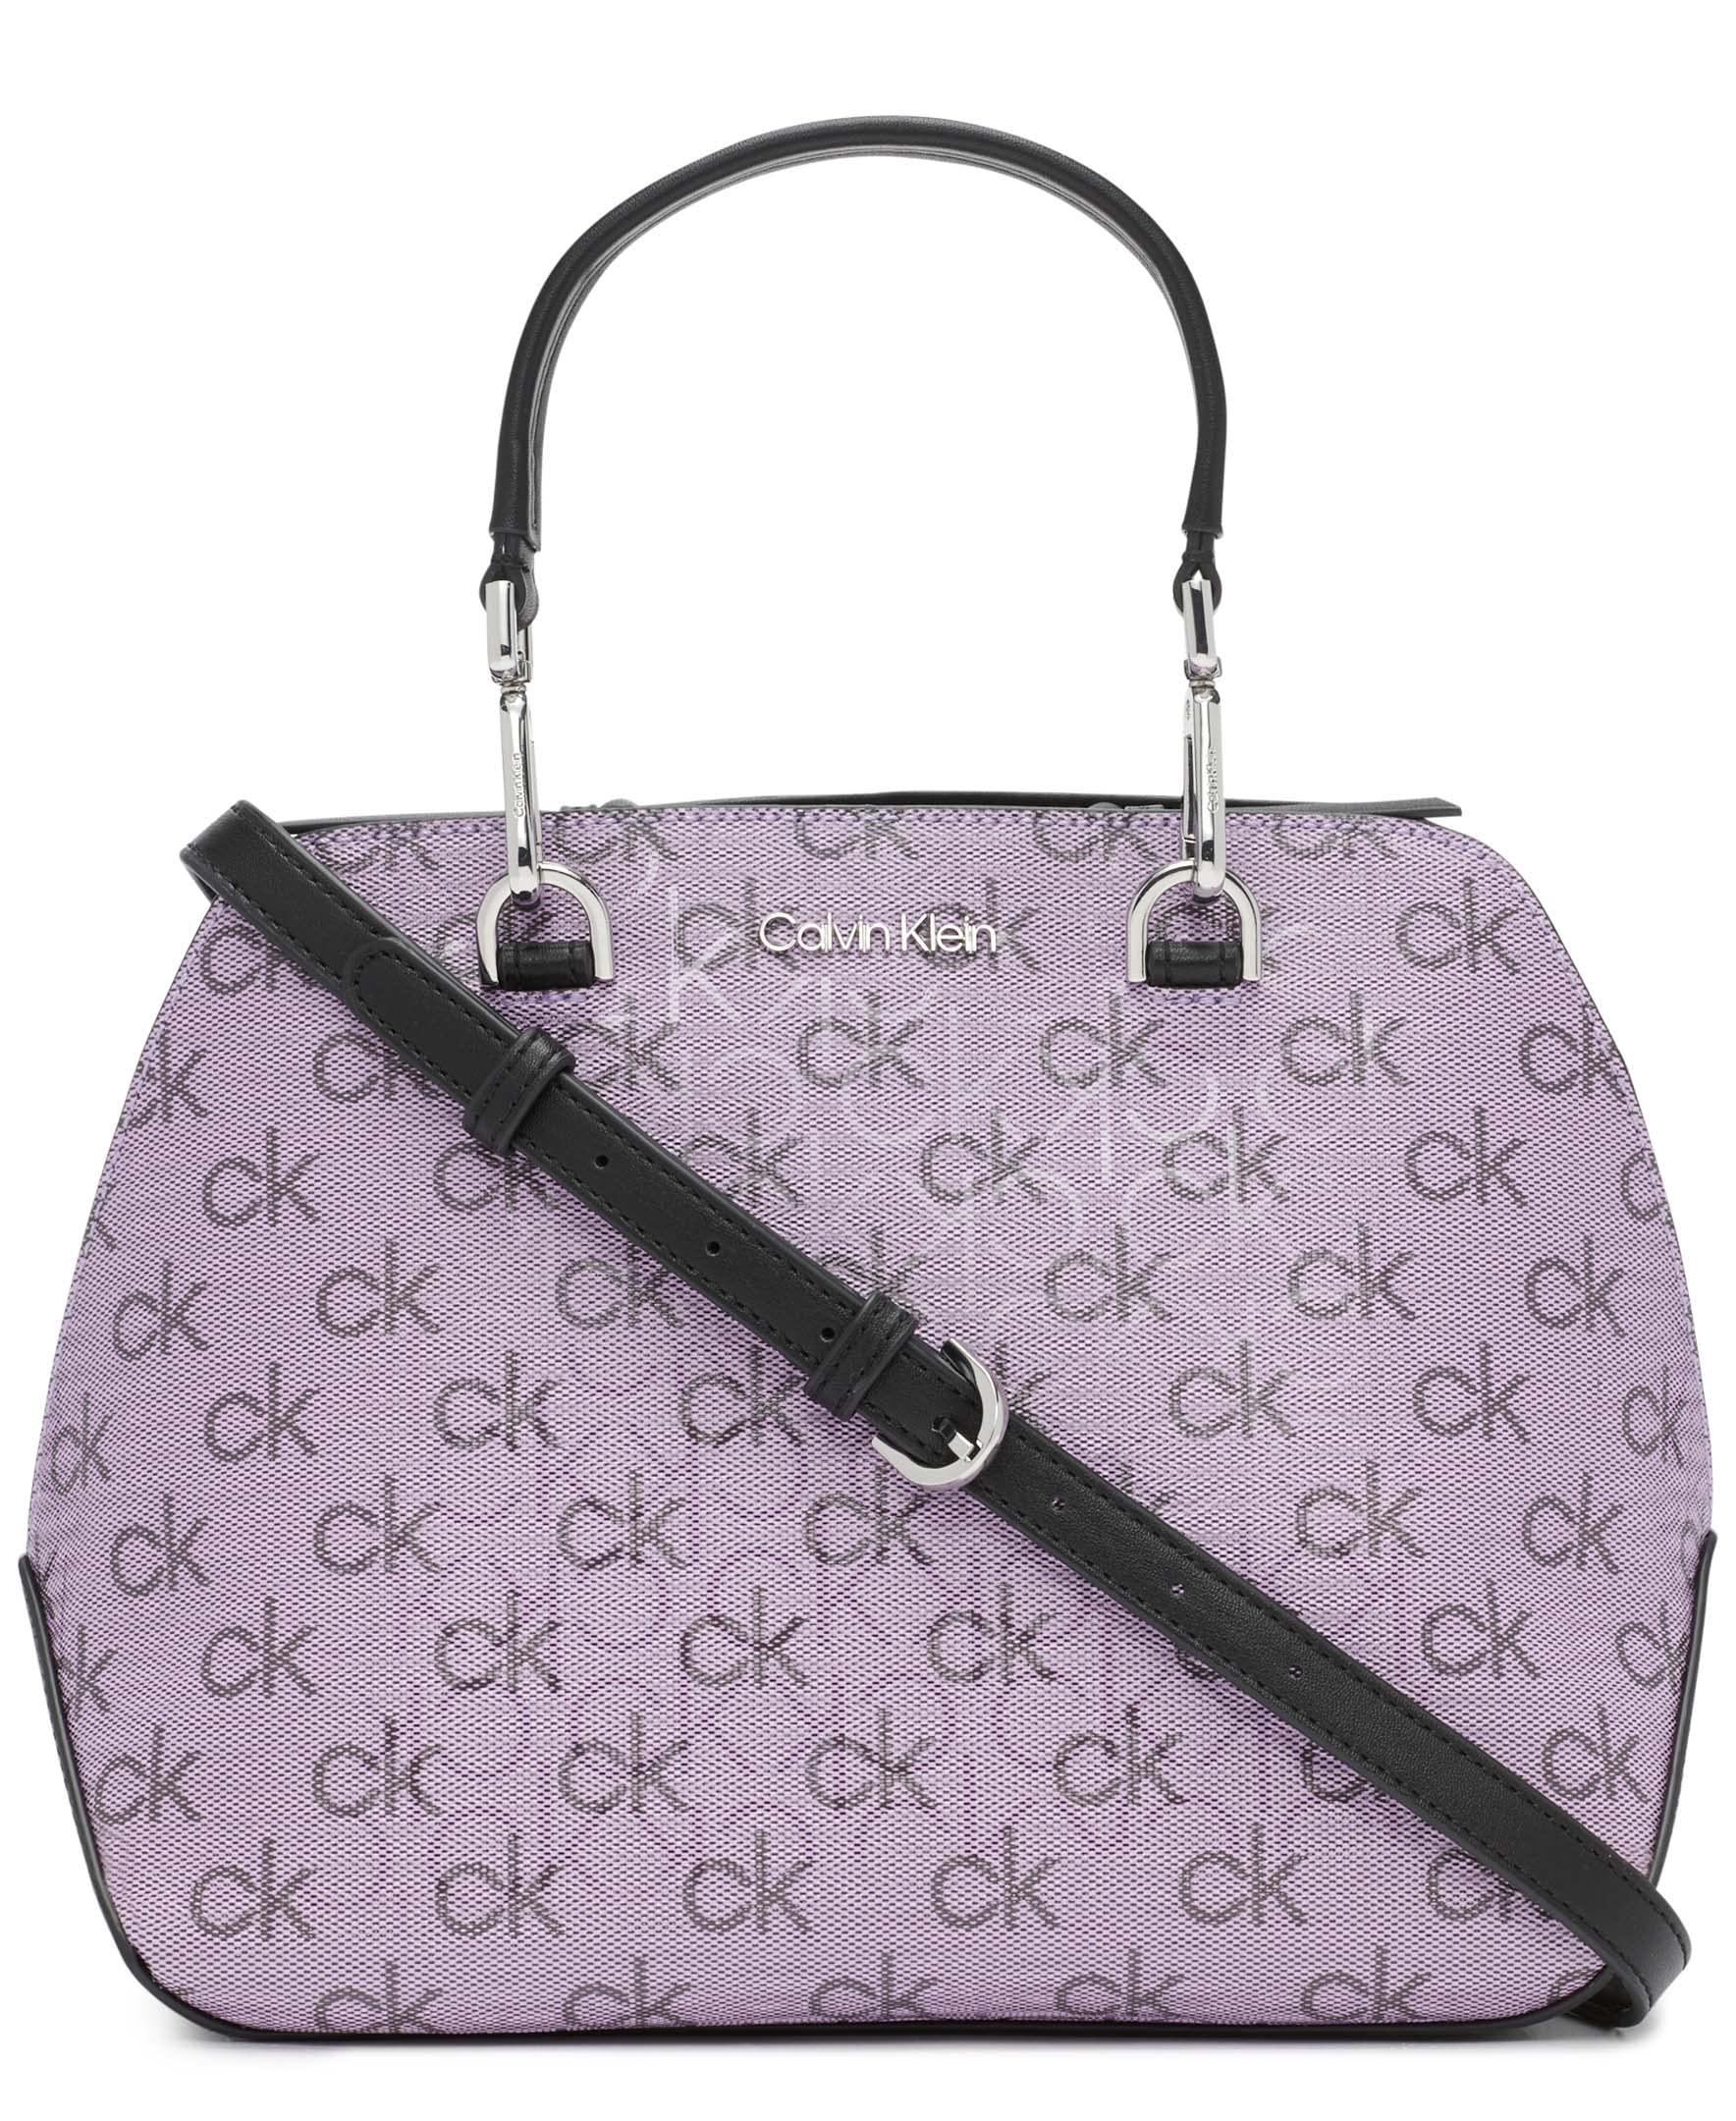 Calvin Klein Lucy Triple Compartment Shoulder Bag, Brown/Khaki